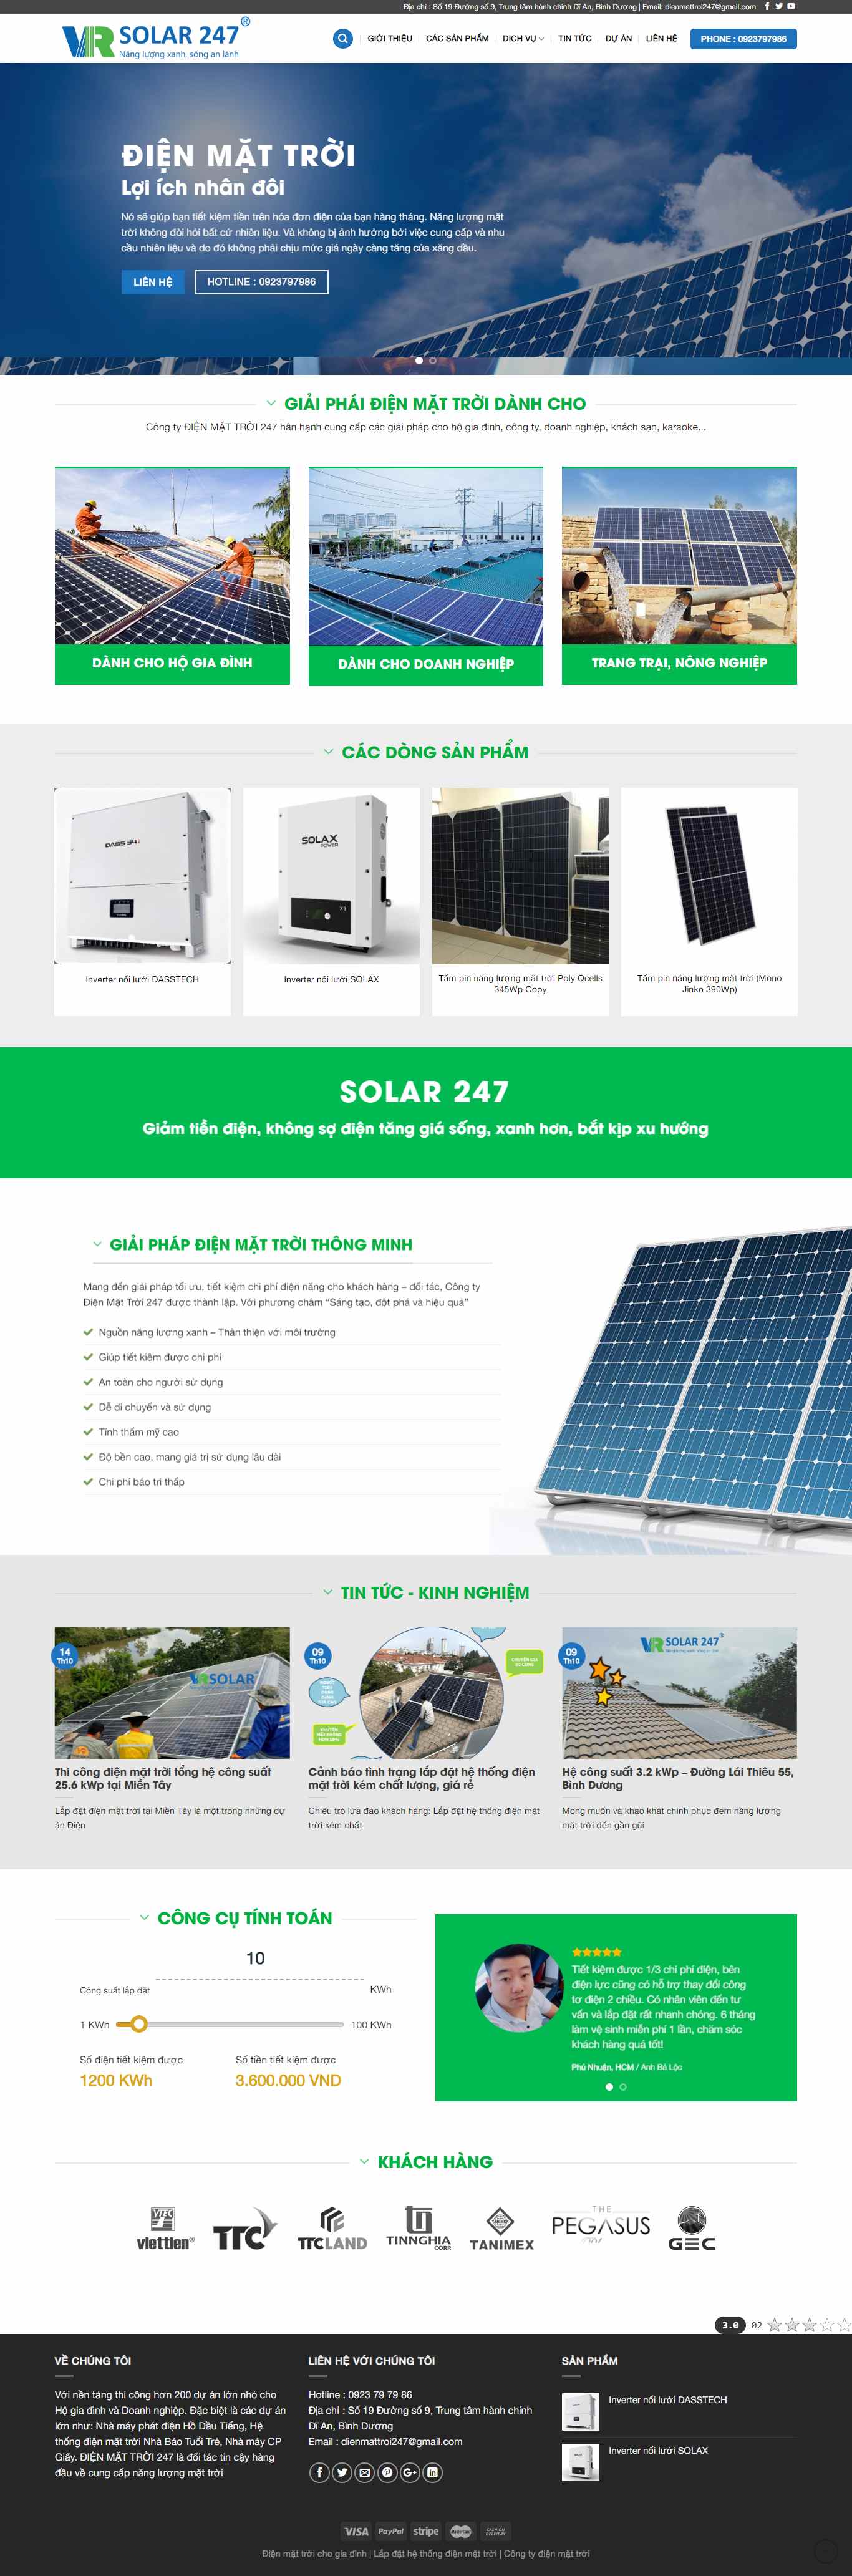 Thiết kế Website hệ thống điện mặt trời - dienmattroi247.com